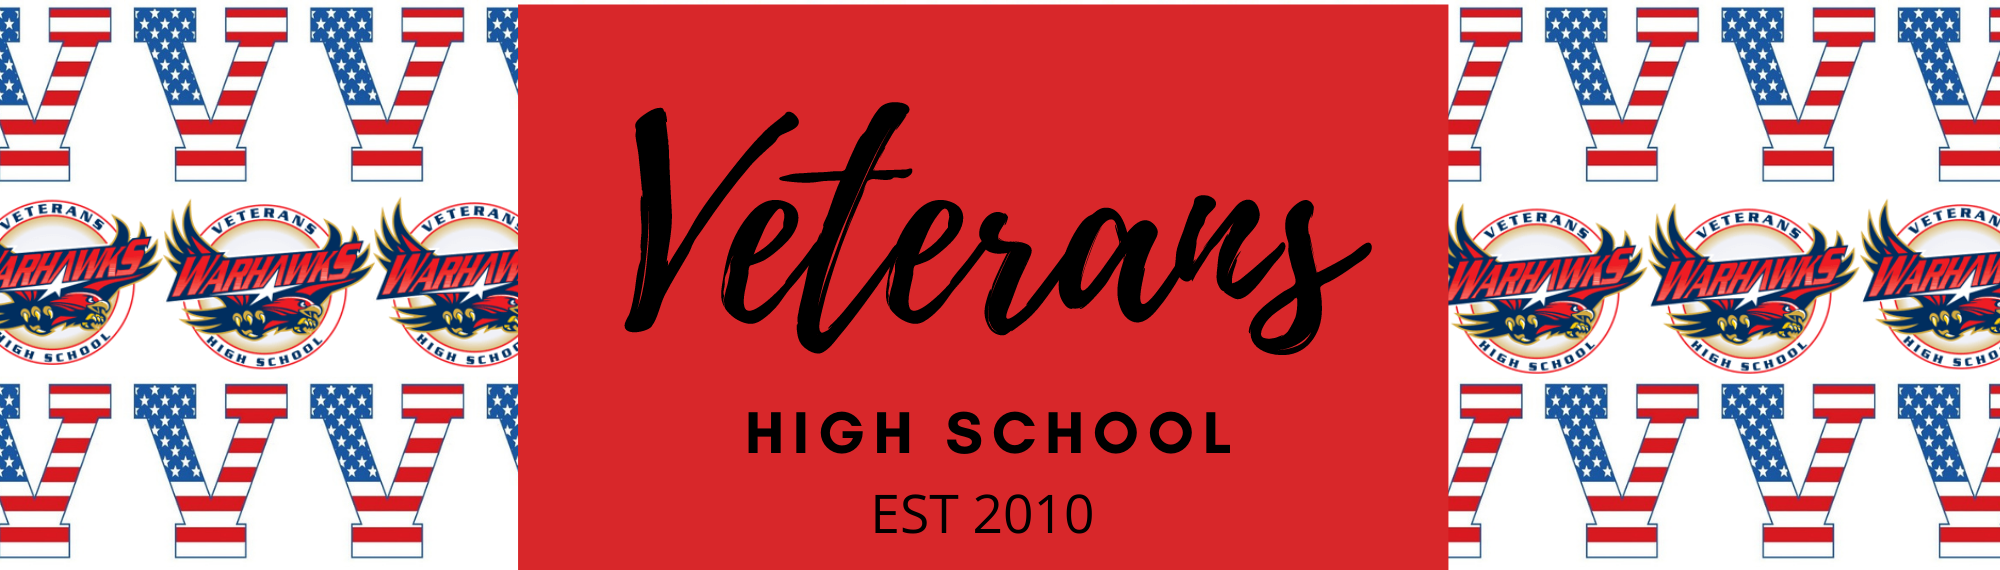 Veterans High School